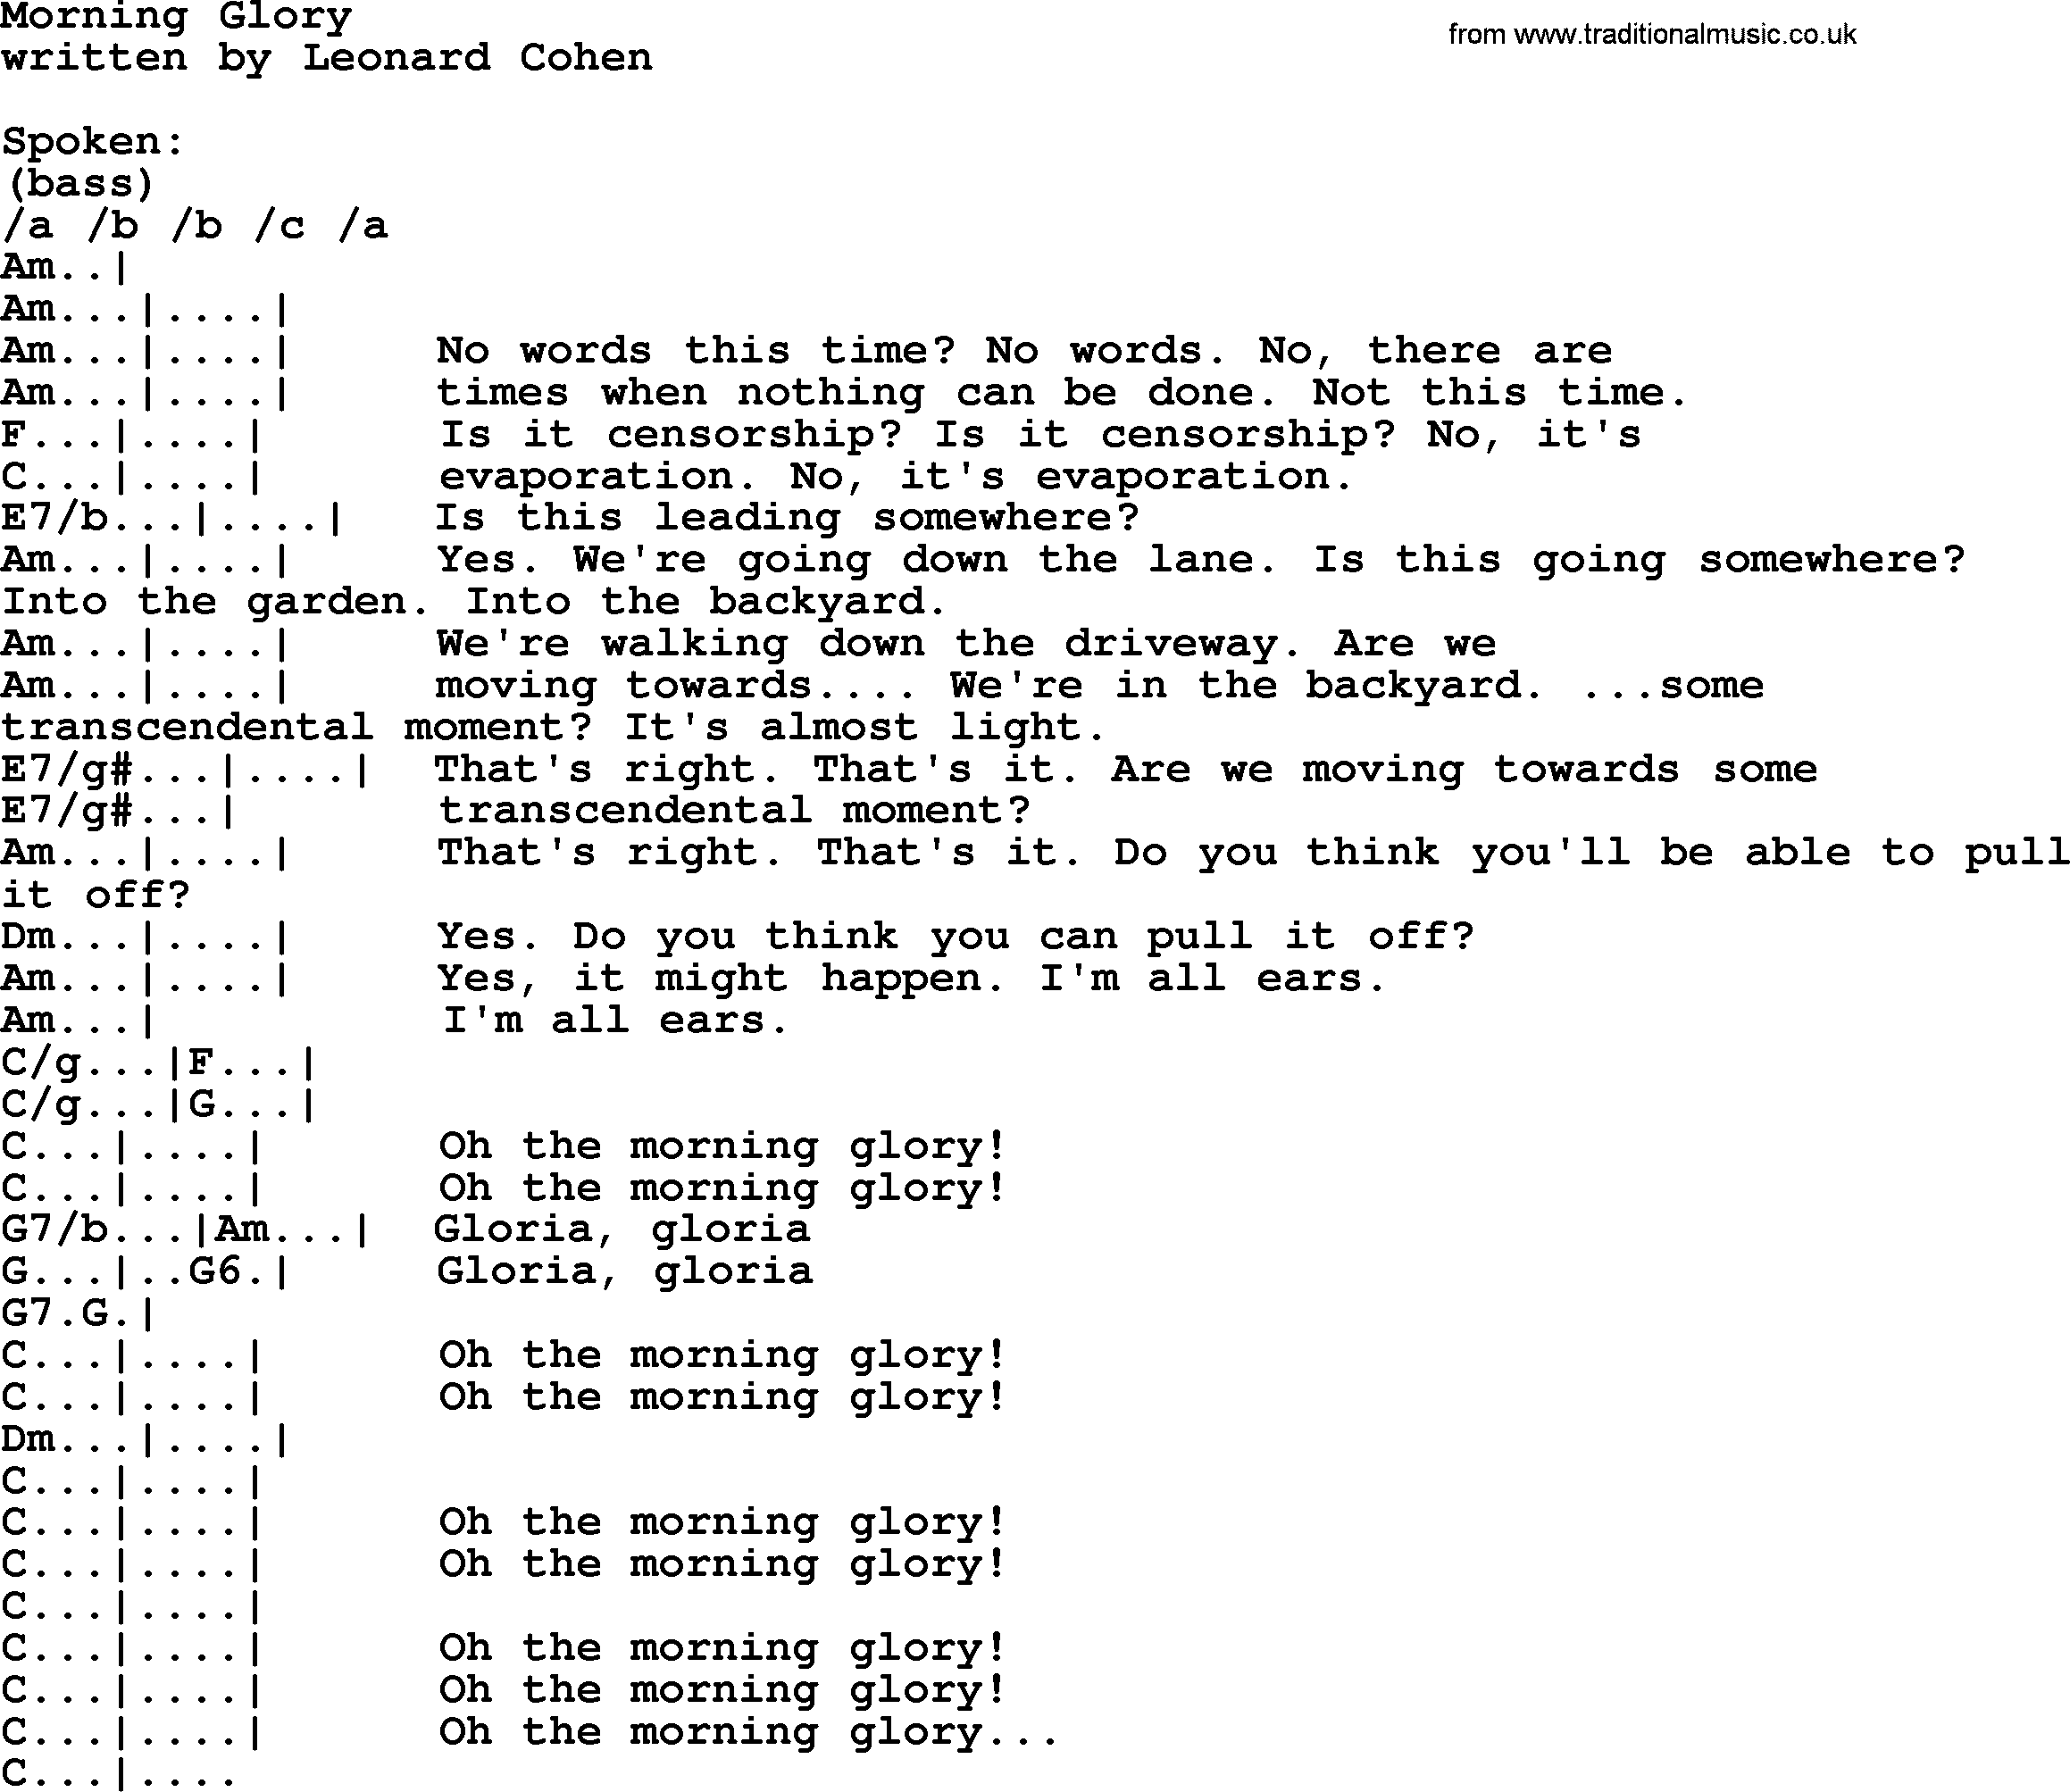 Leonard Cohen song Morning Glory, lyrics and chords